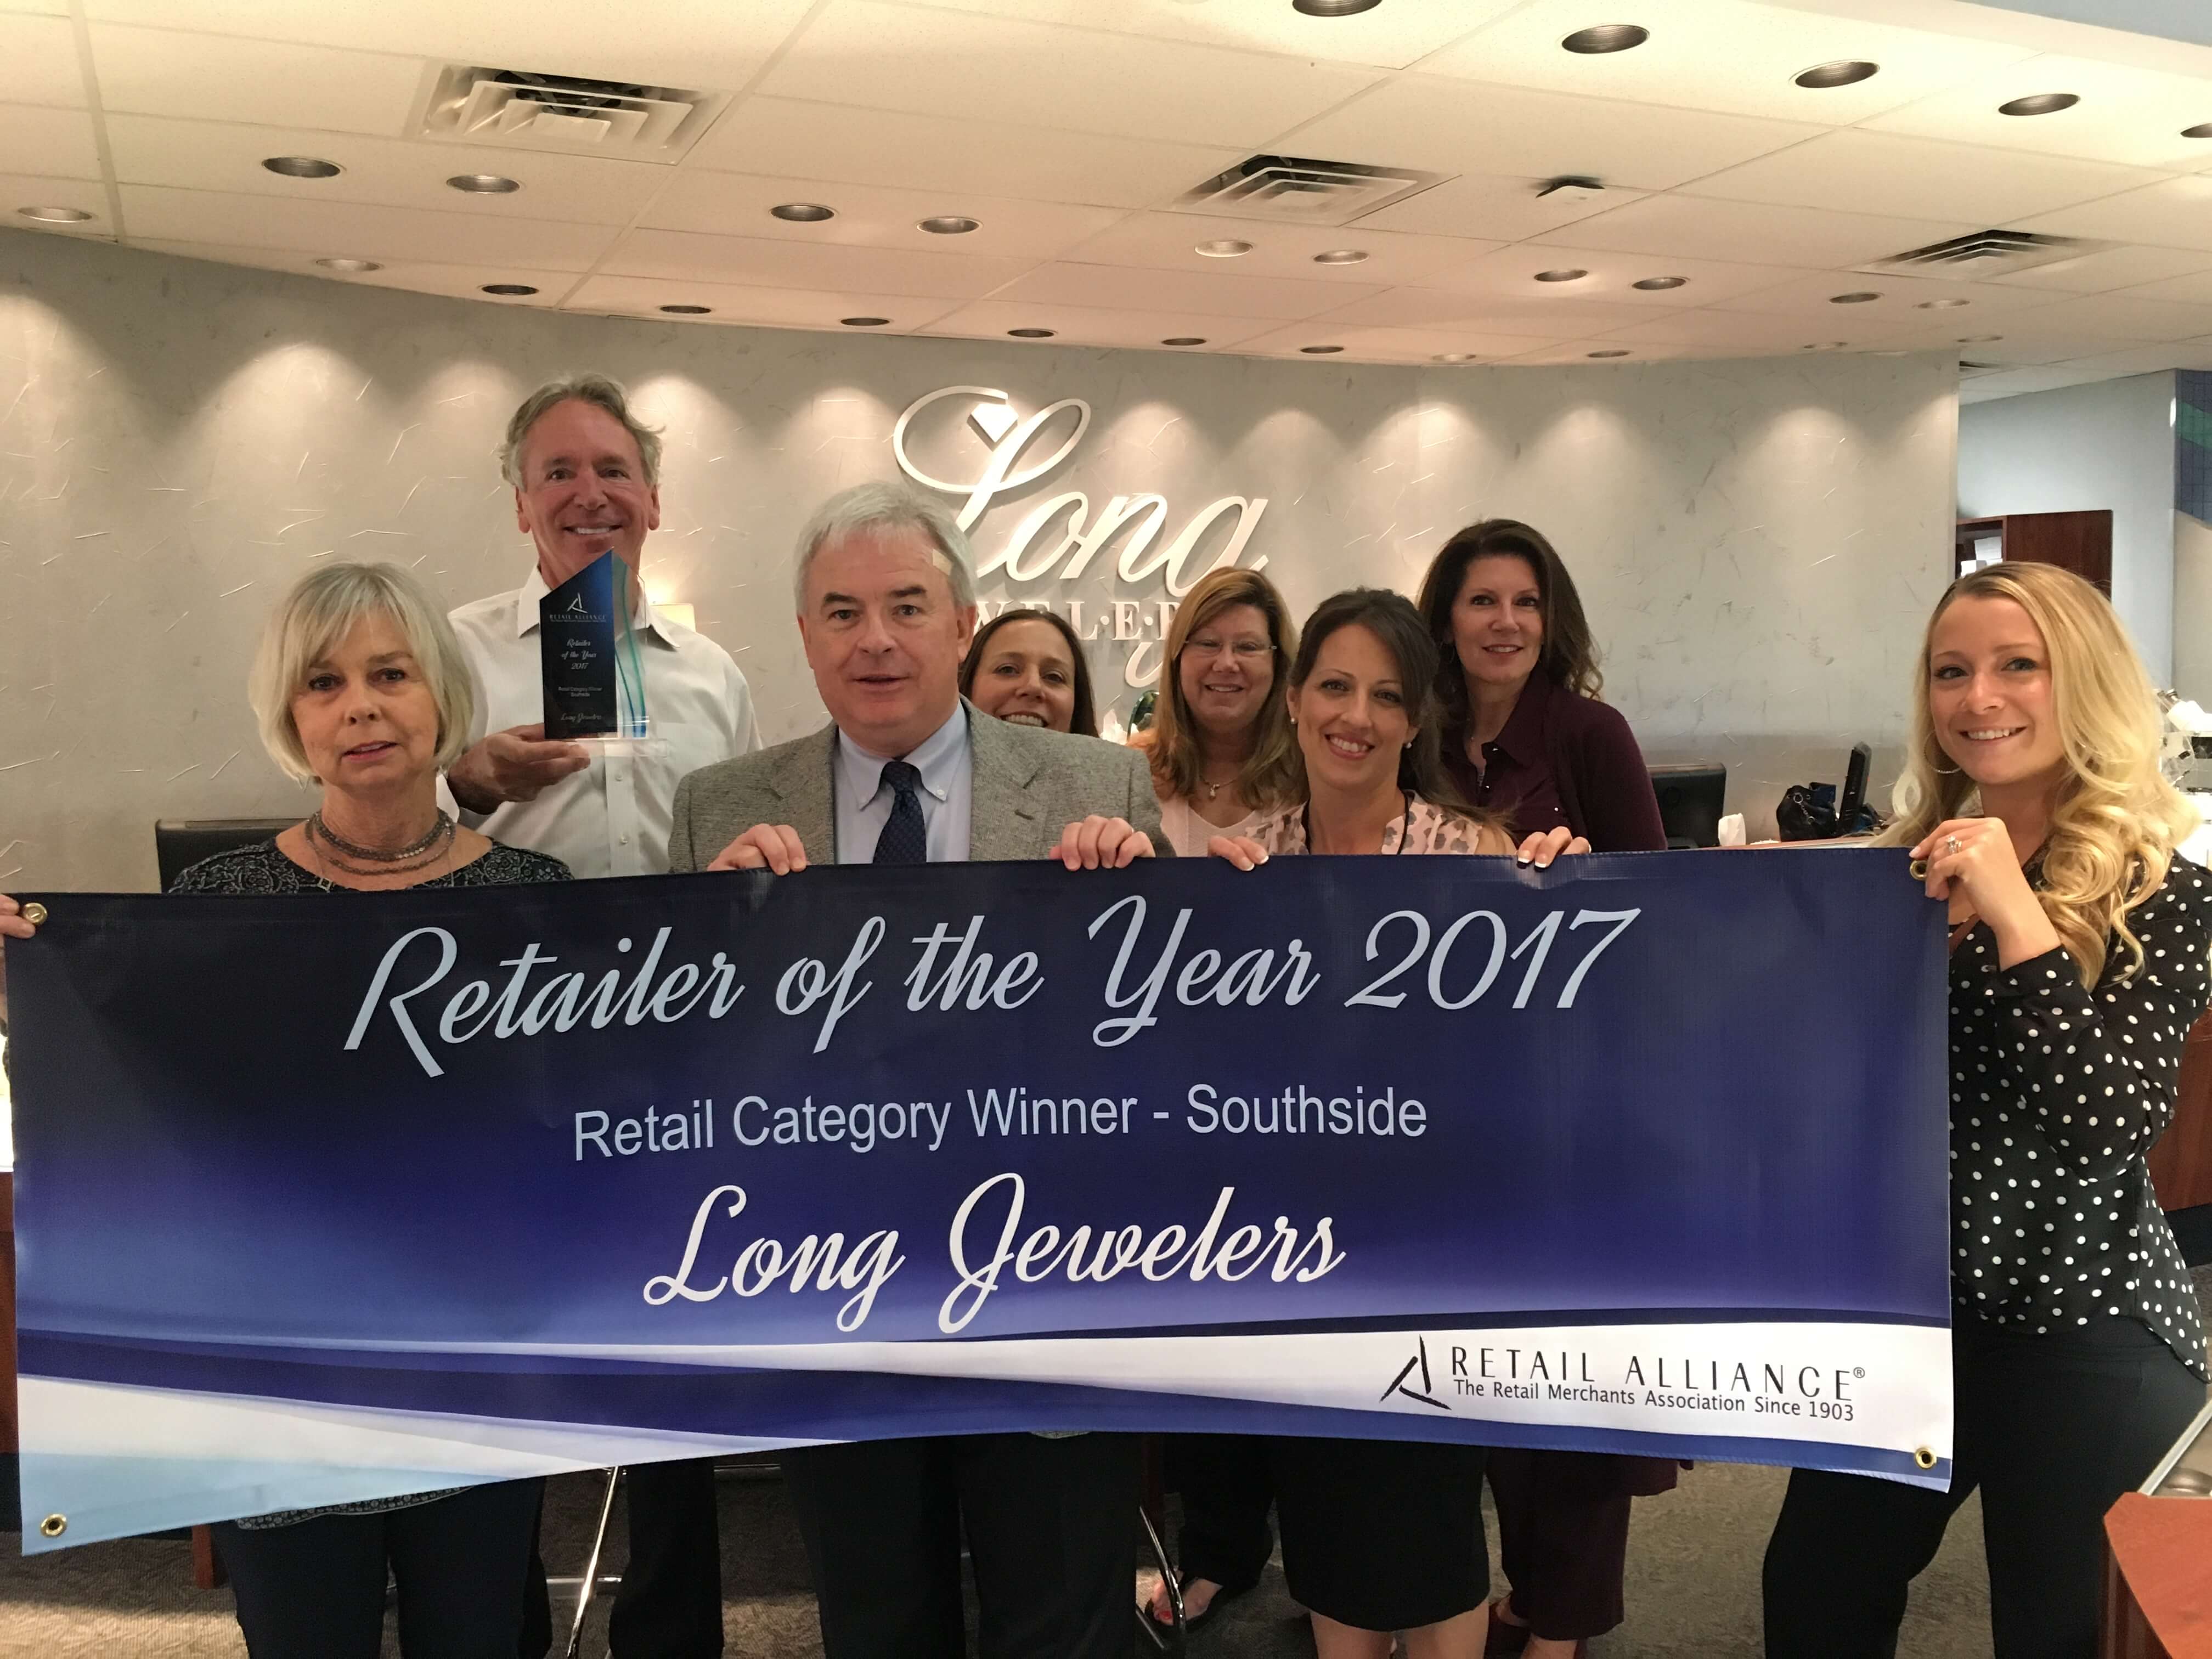 Virginia Beach's Long Jewelers Named Retailer of the Year 2017